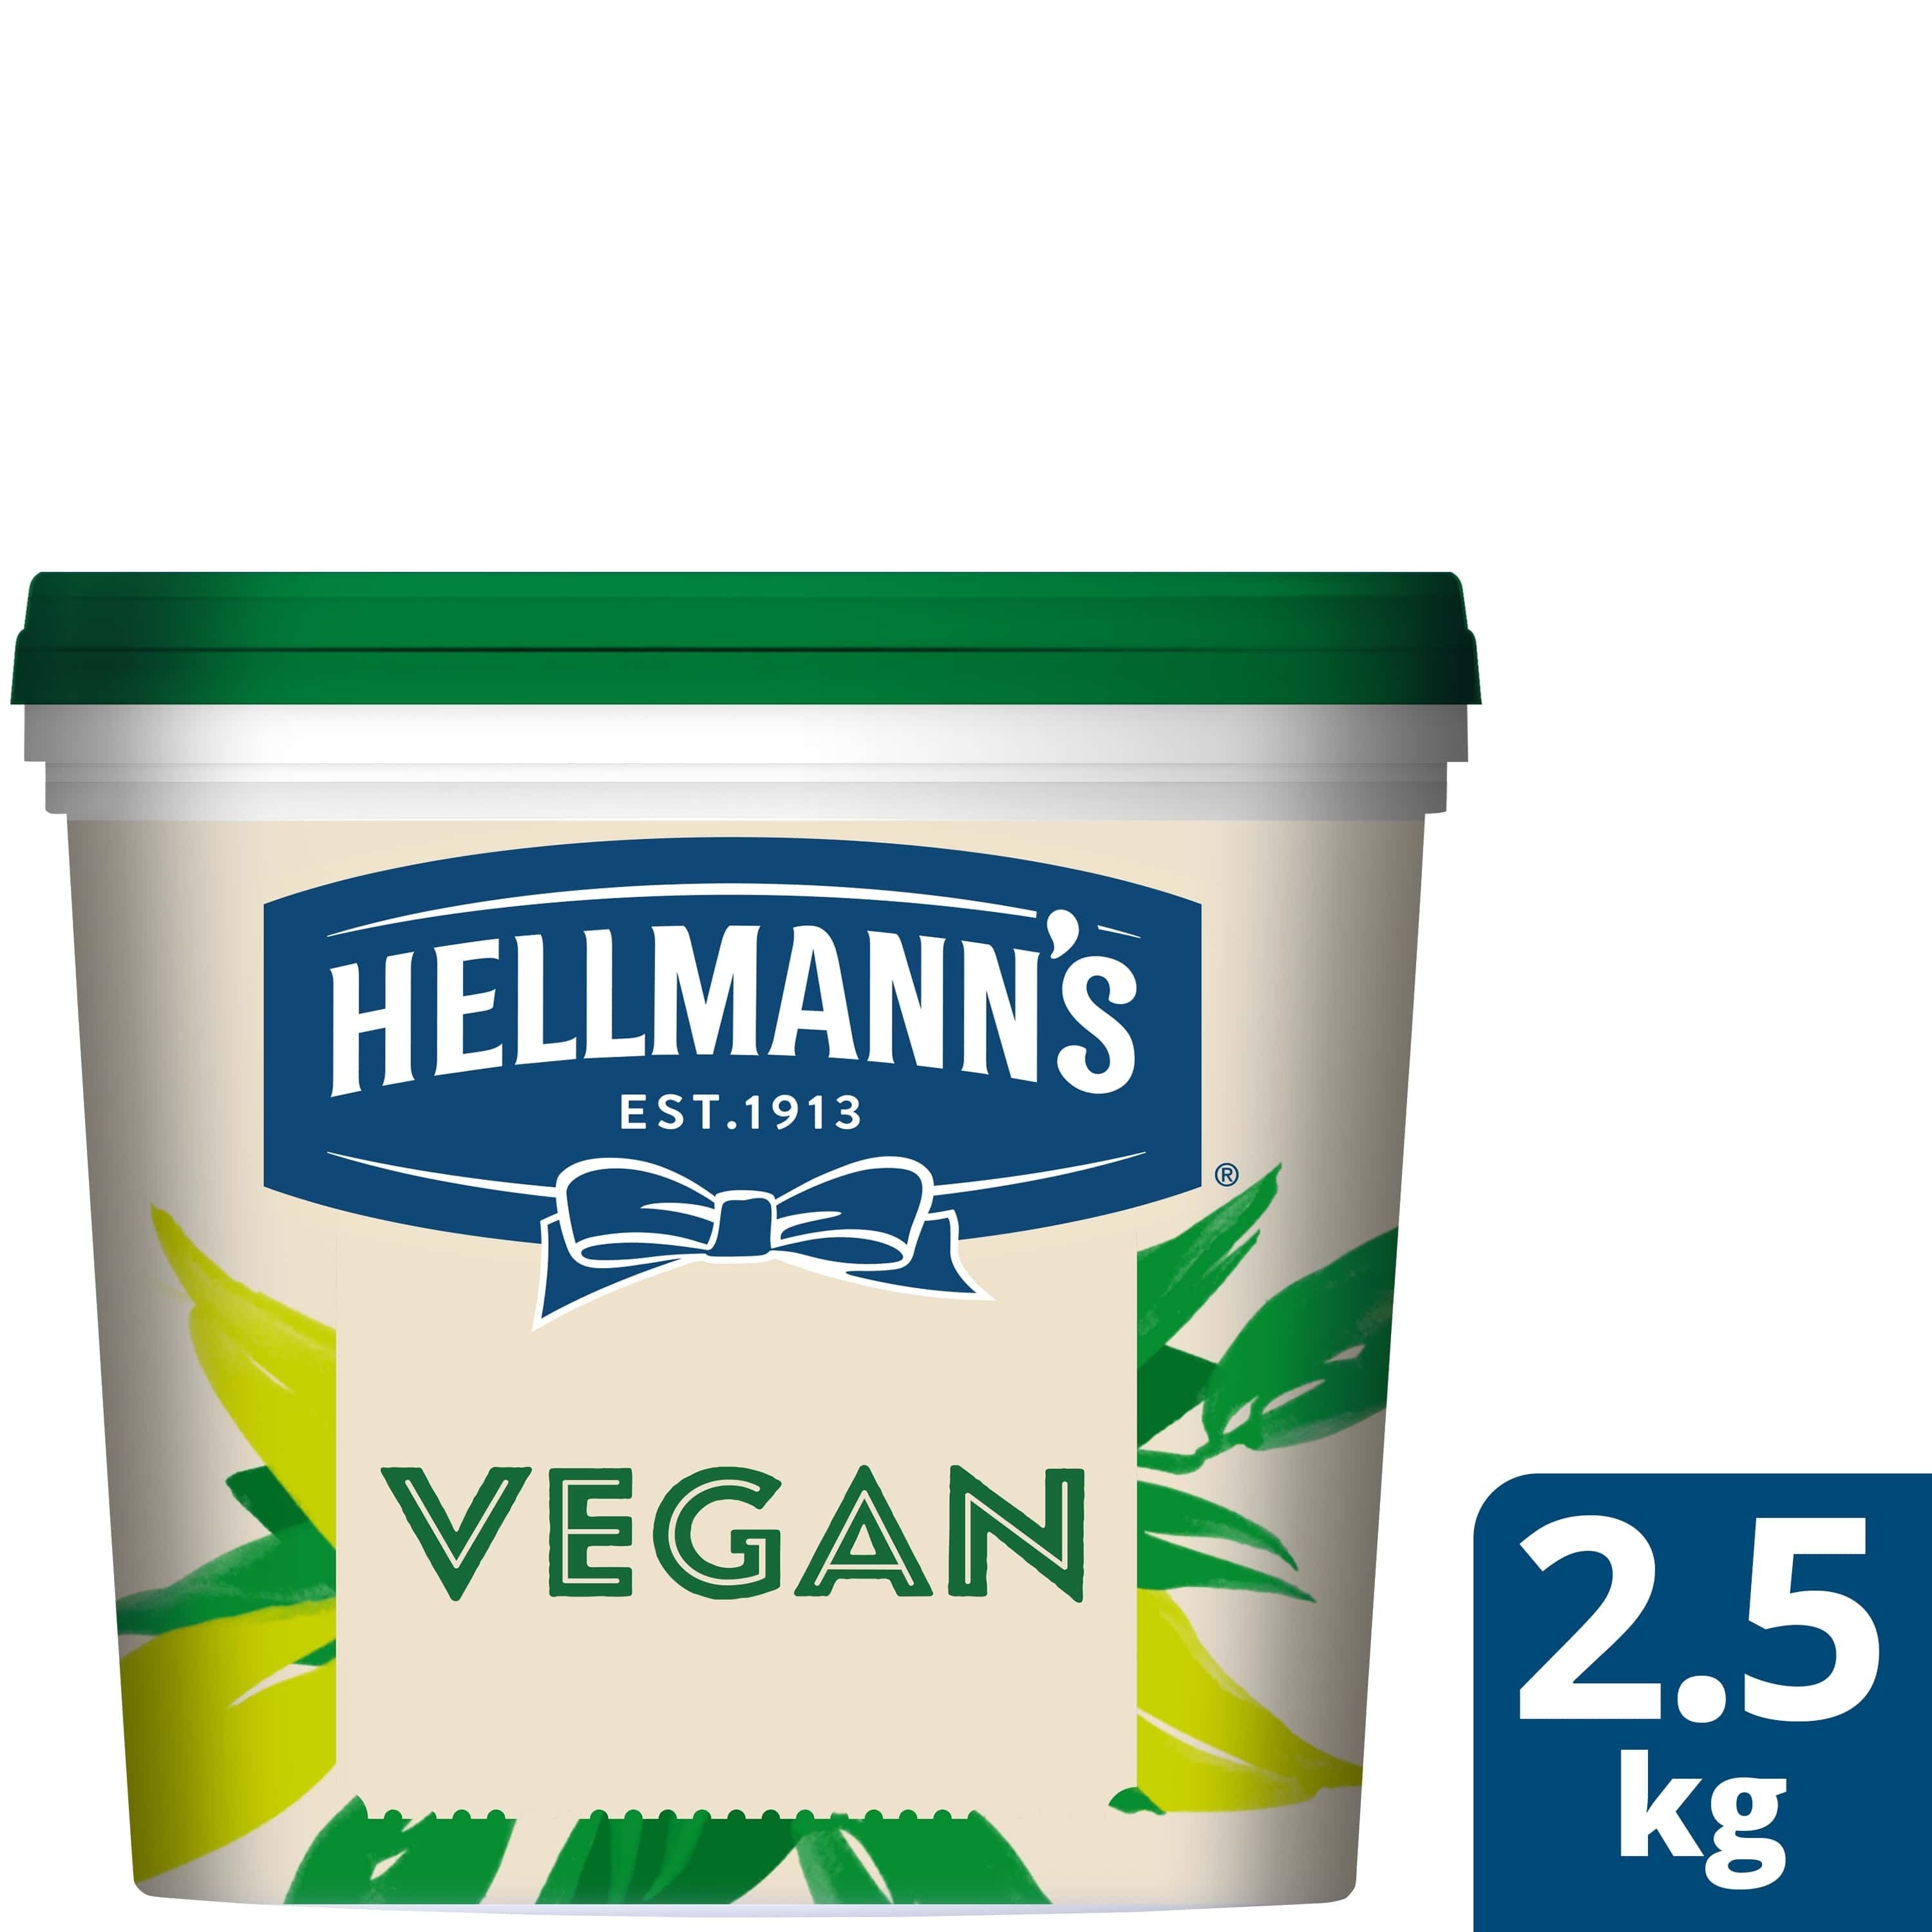 Hellmann's Vegan - 